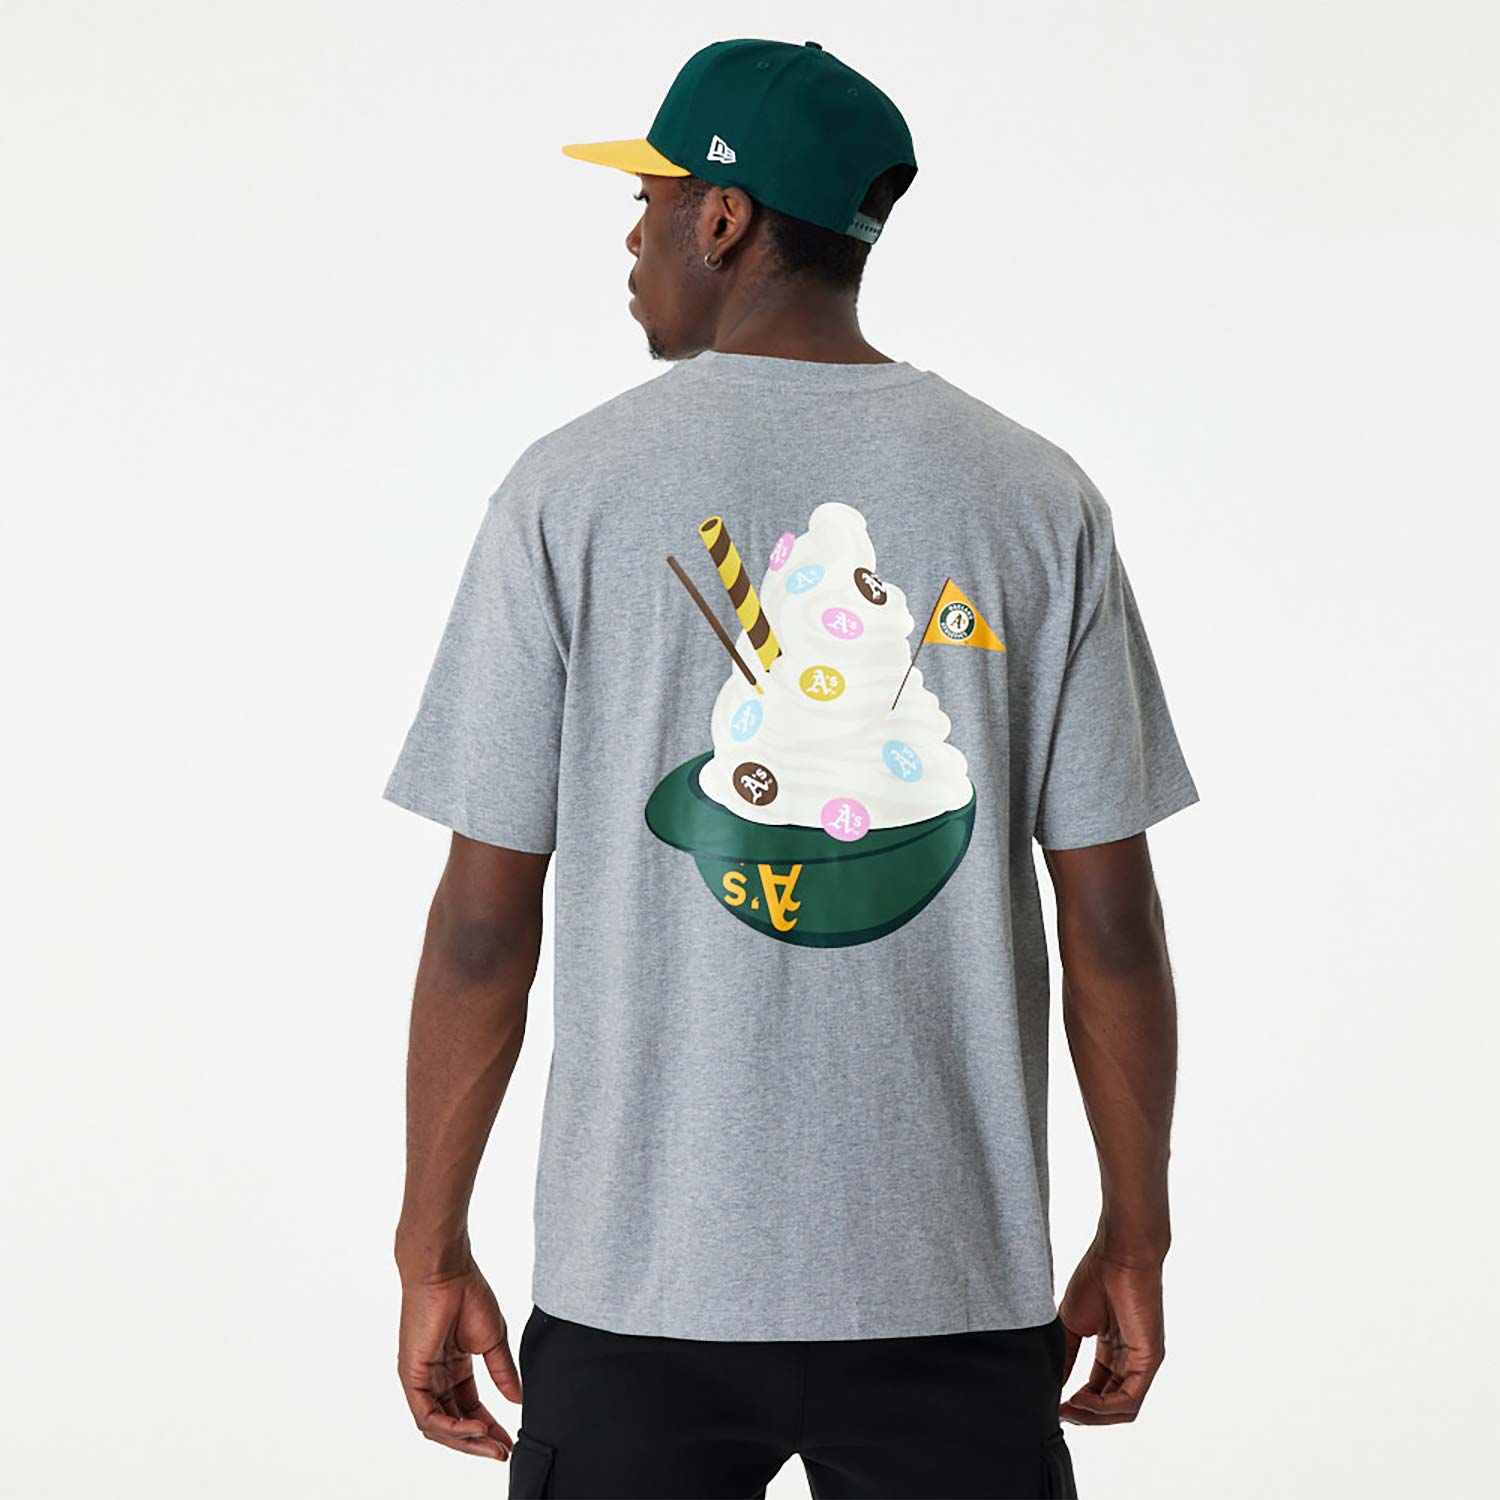 MLB Oakland Athletics Boys' T-Shirt - XS